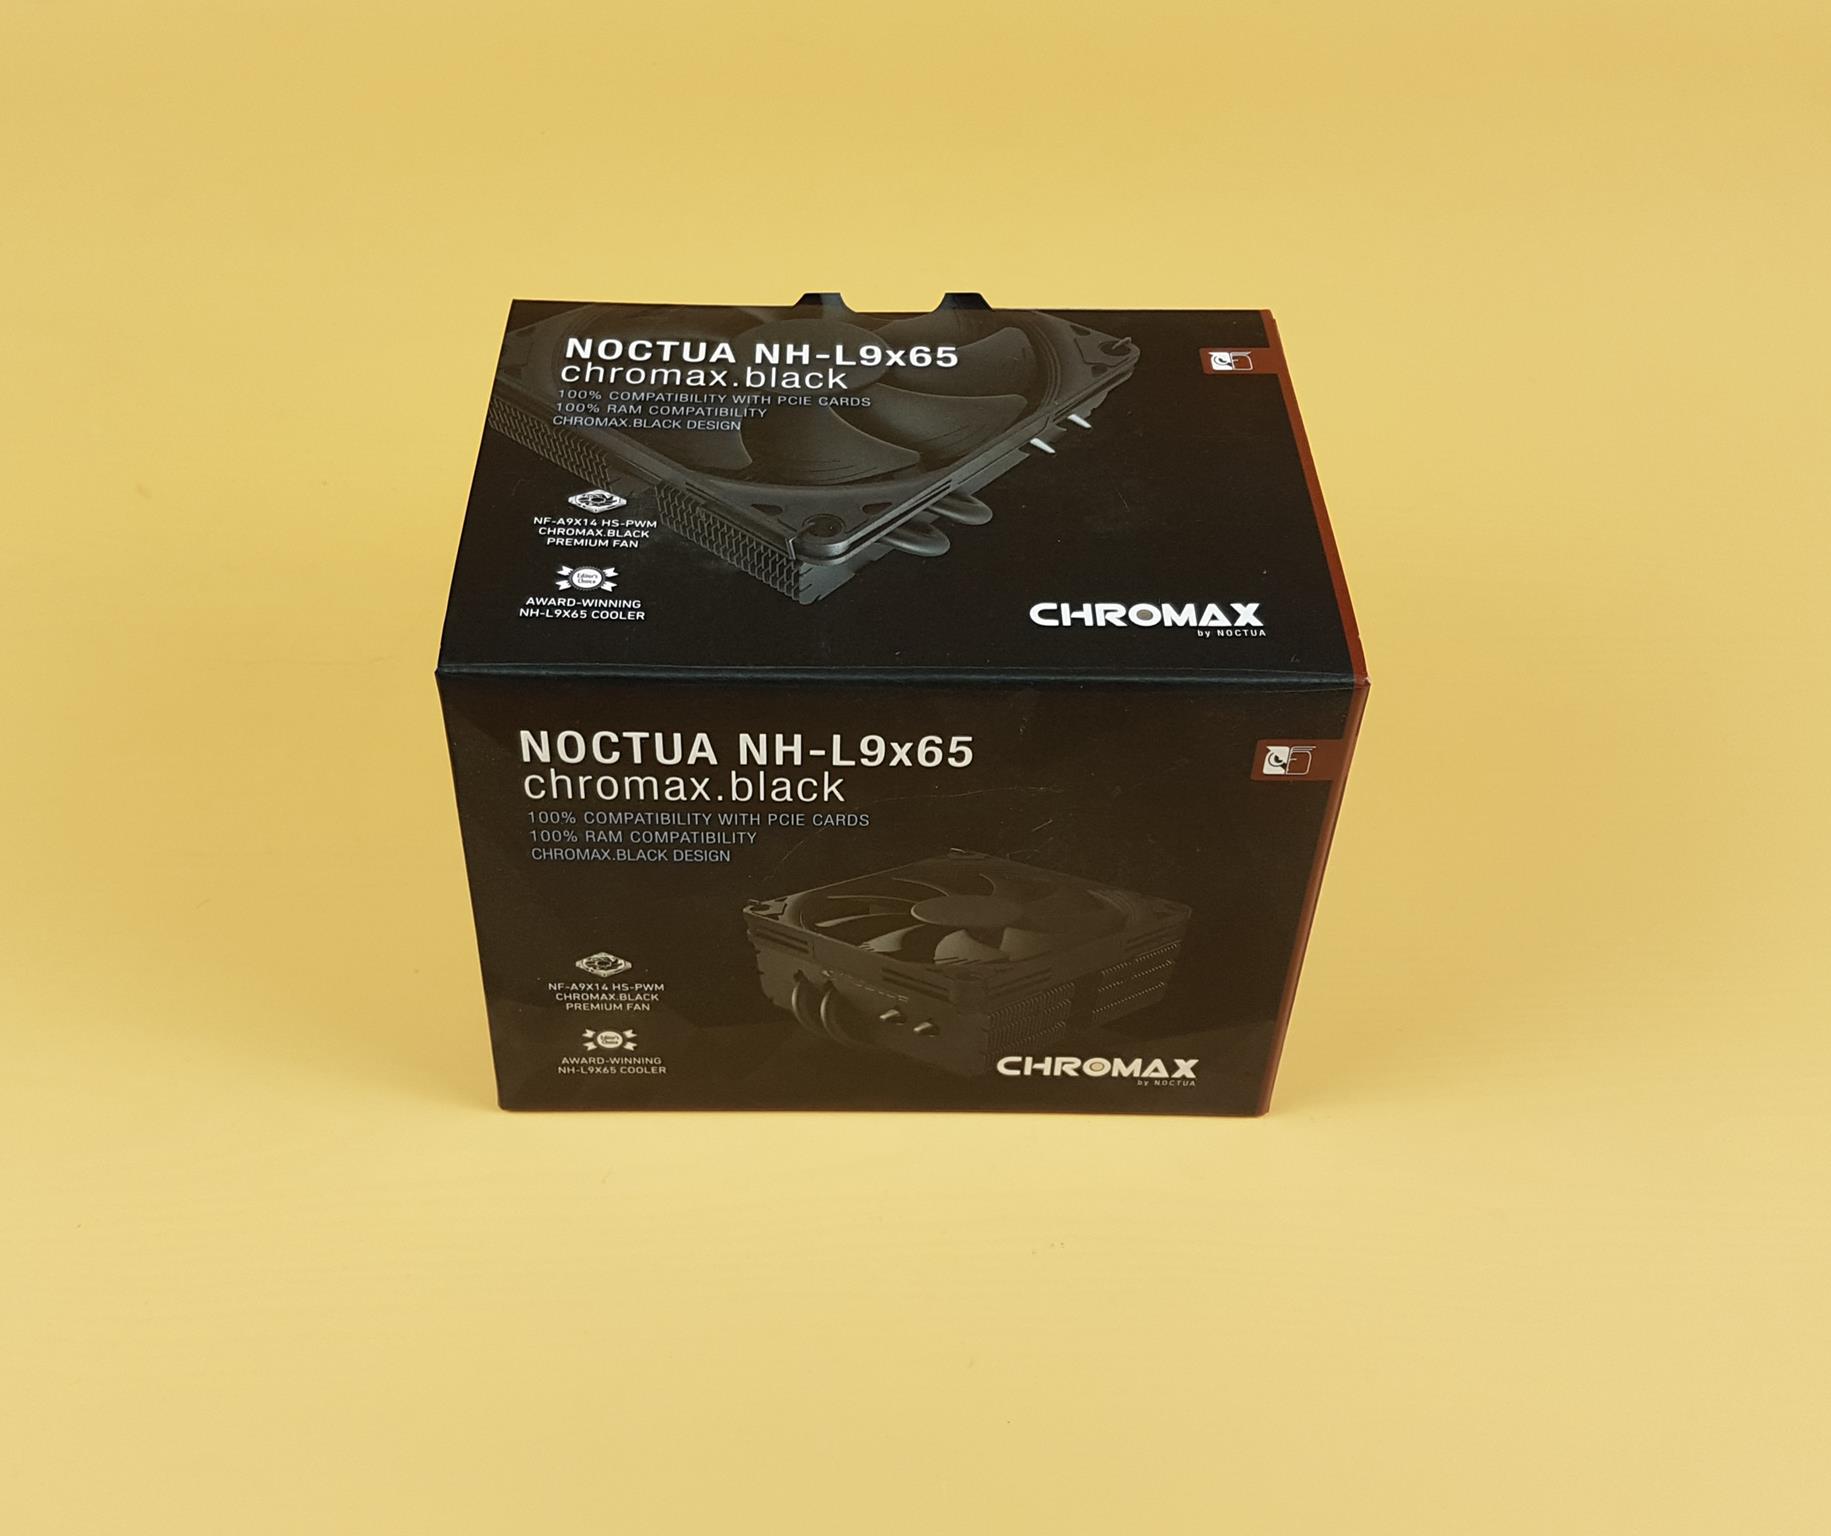 Noctua NH L9x65 chromax.black Packing